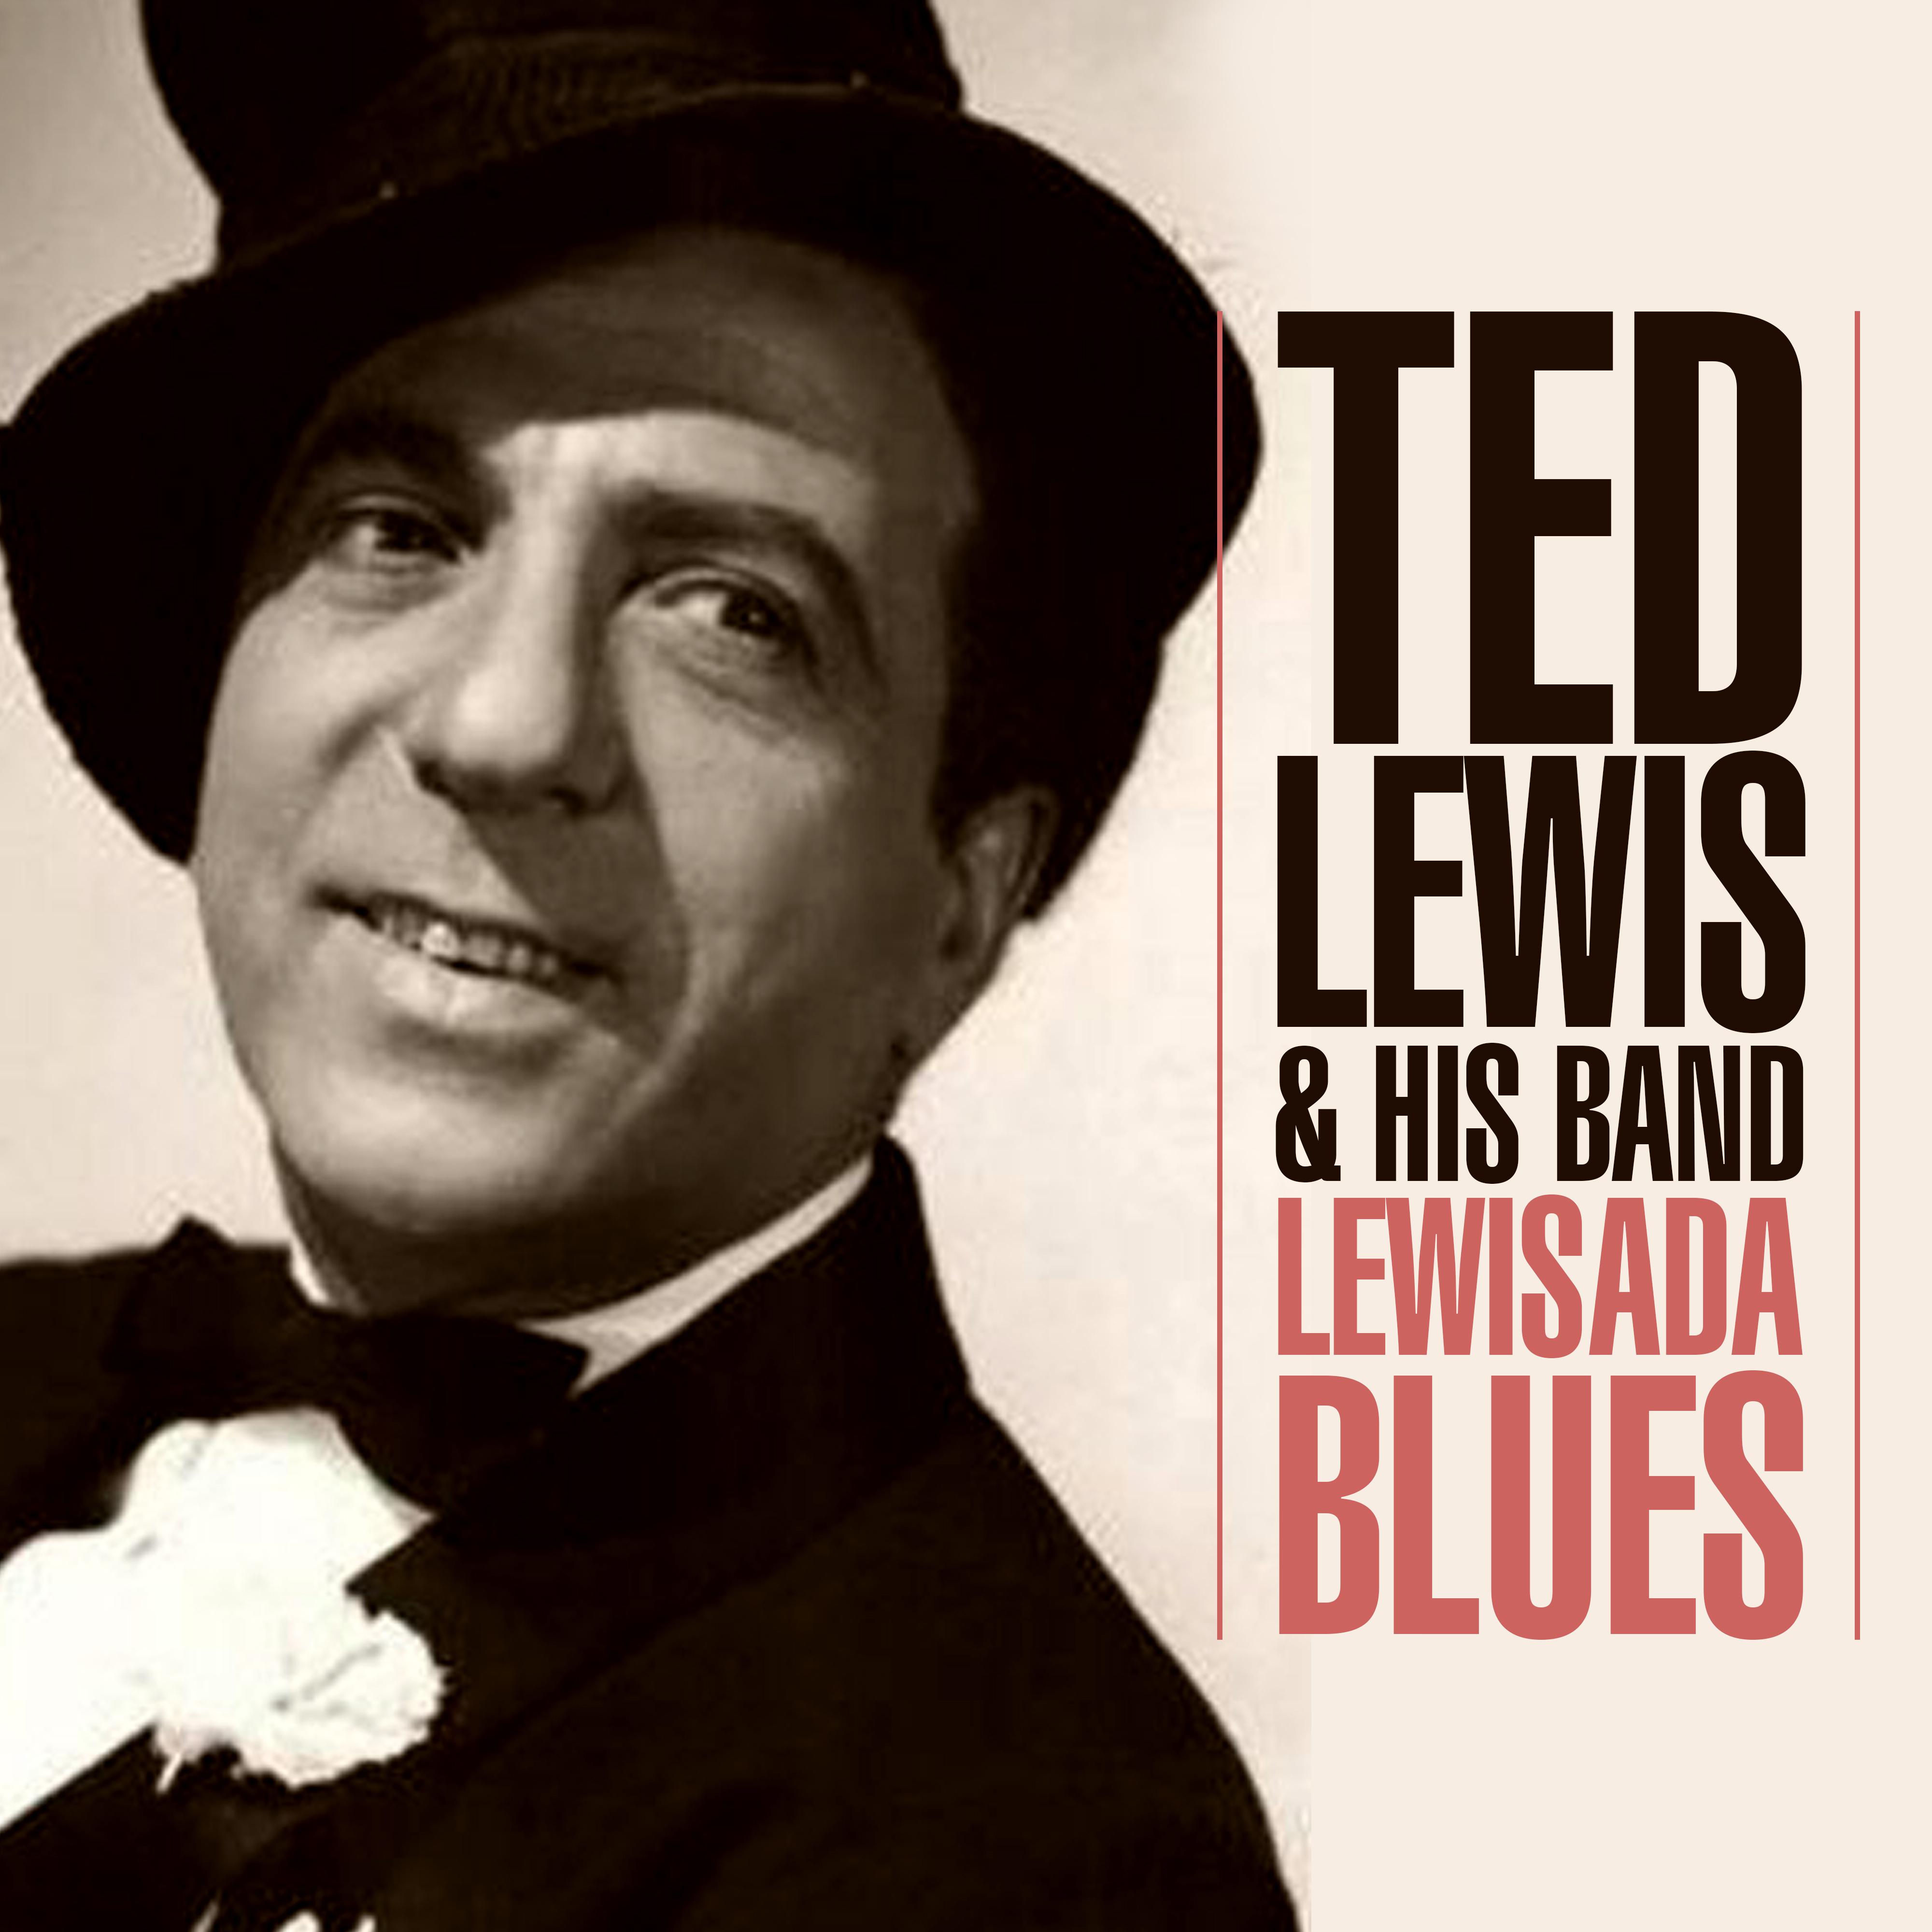 Lewisada Blues